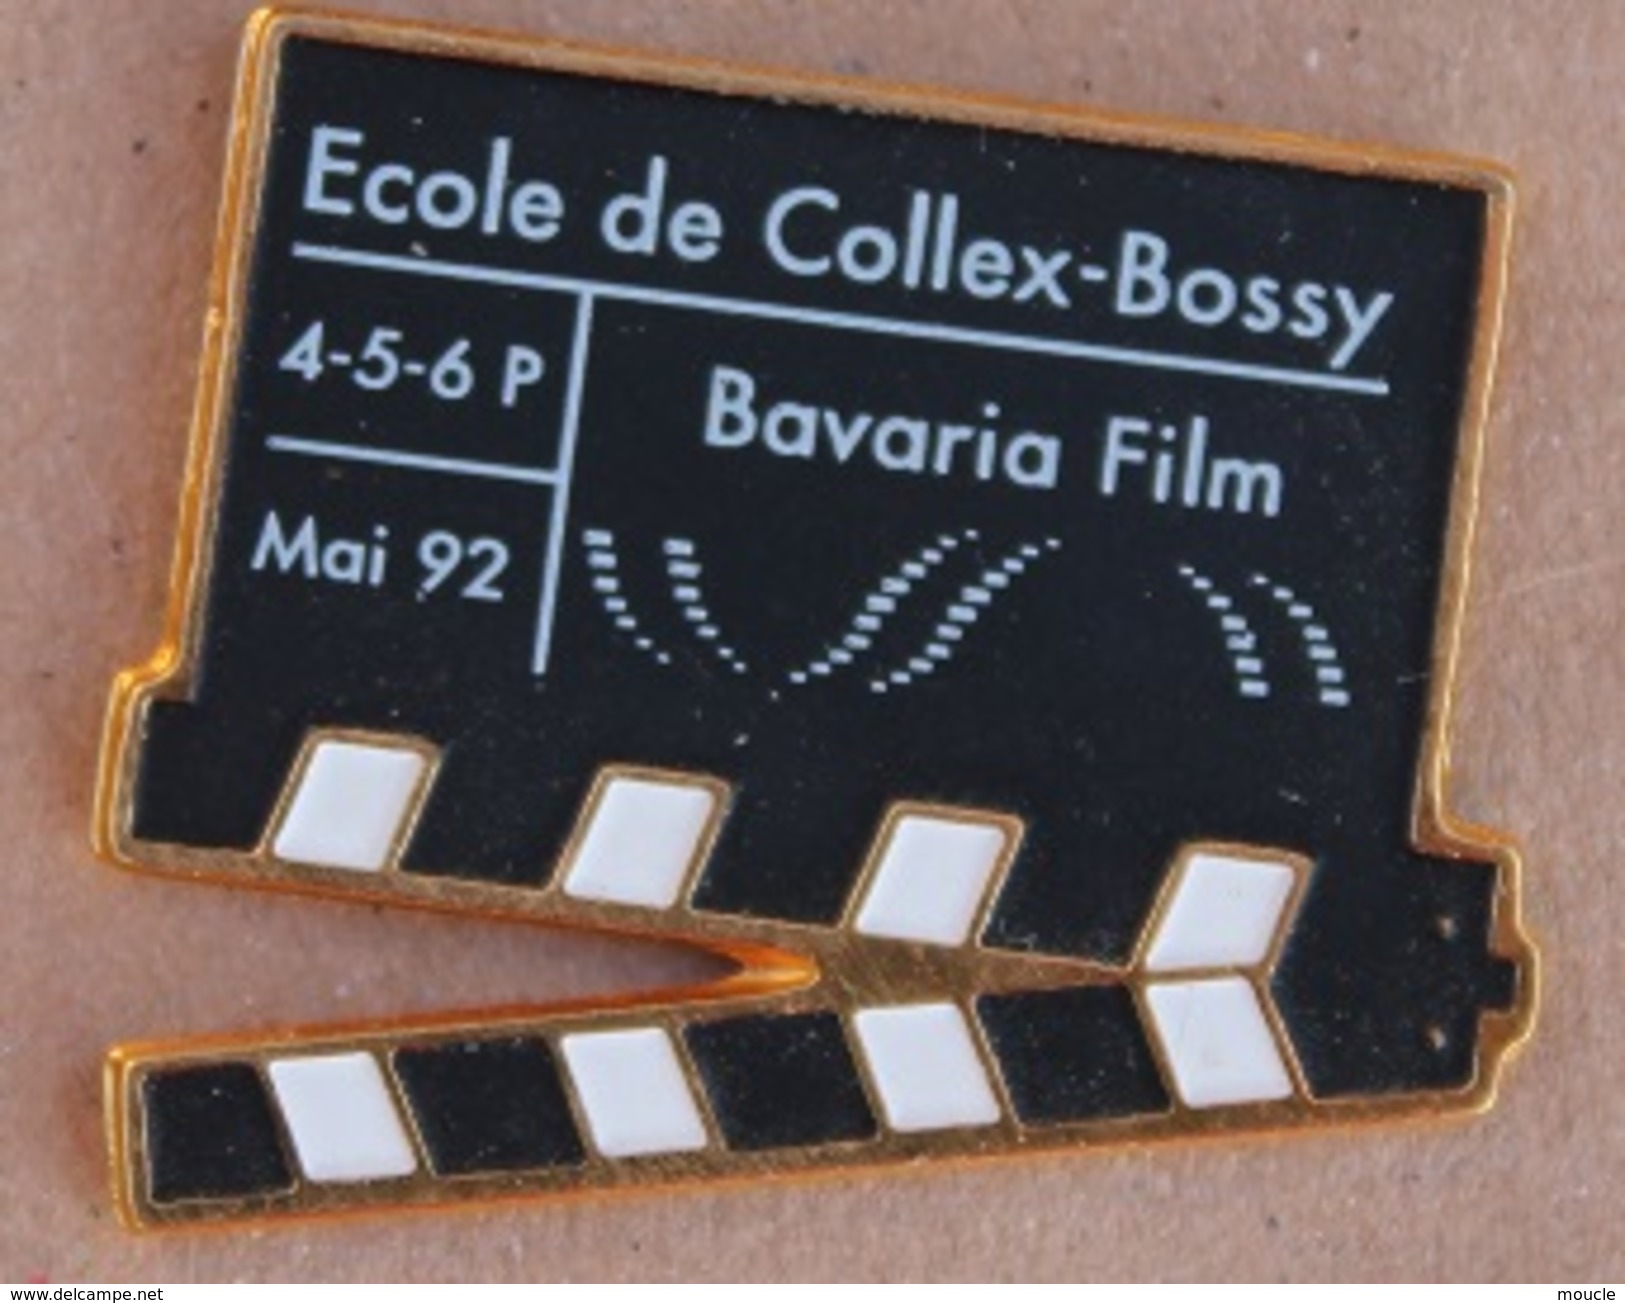 CLAP DE REALISATEUR - CINEMA - FILM - ECOLE DE COLLEY-BOSSY - GENEVE - SUISSE - BAVARIA FILM - MAI 92   -  (17) - Cinéma